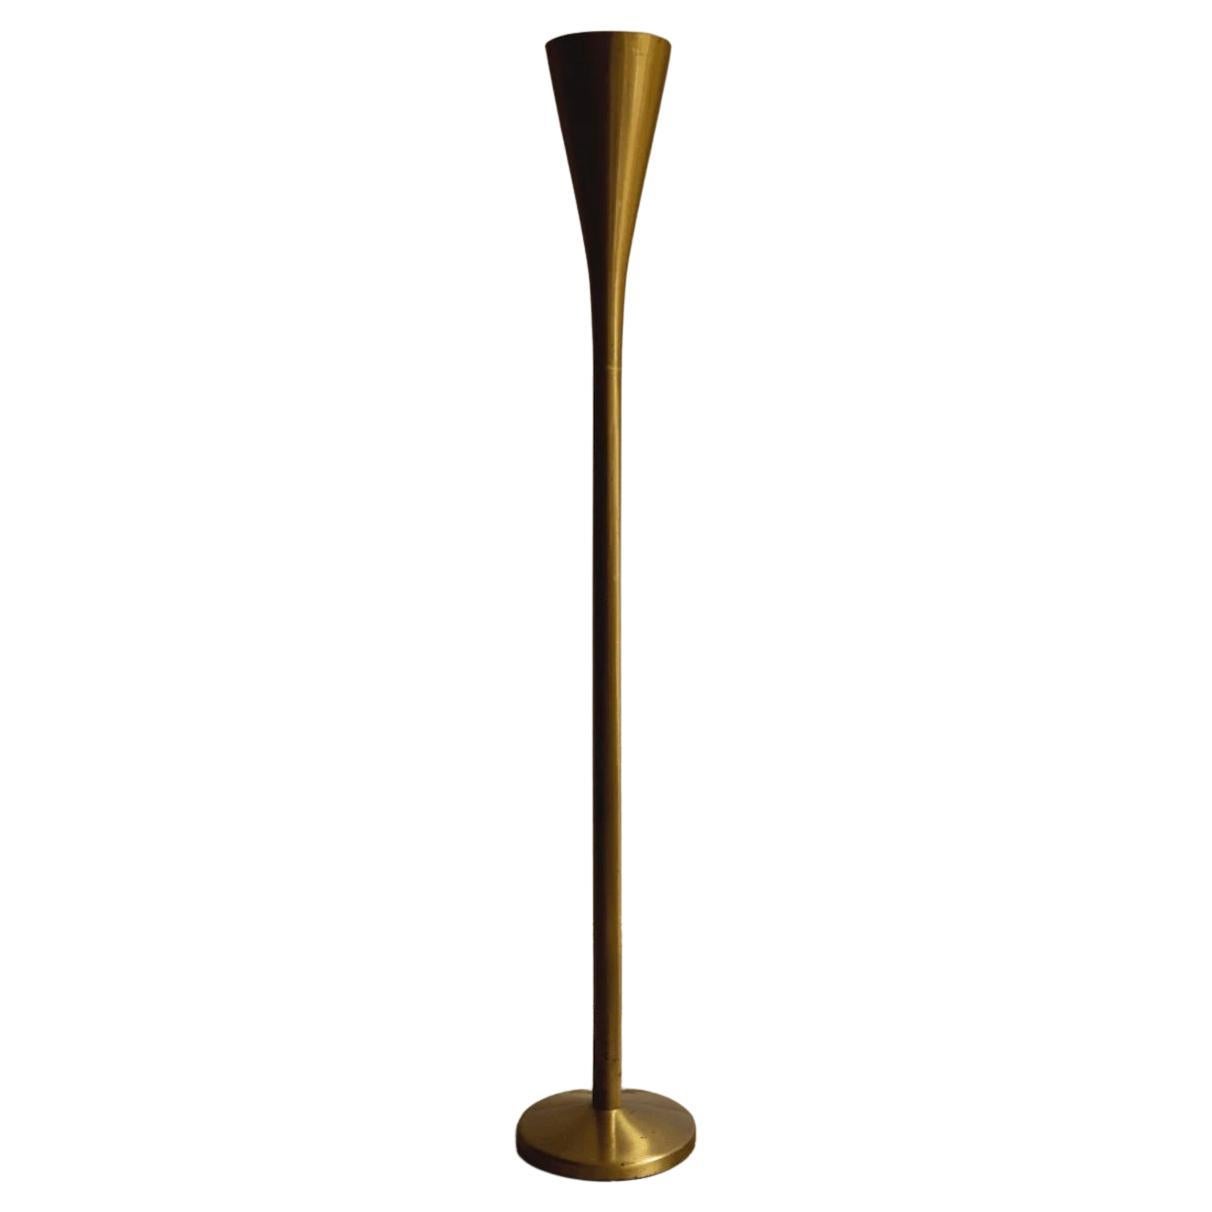 Pietro Chiesa Lacquered Brass ‘Luminator’ Floor Lamp For Sale